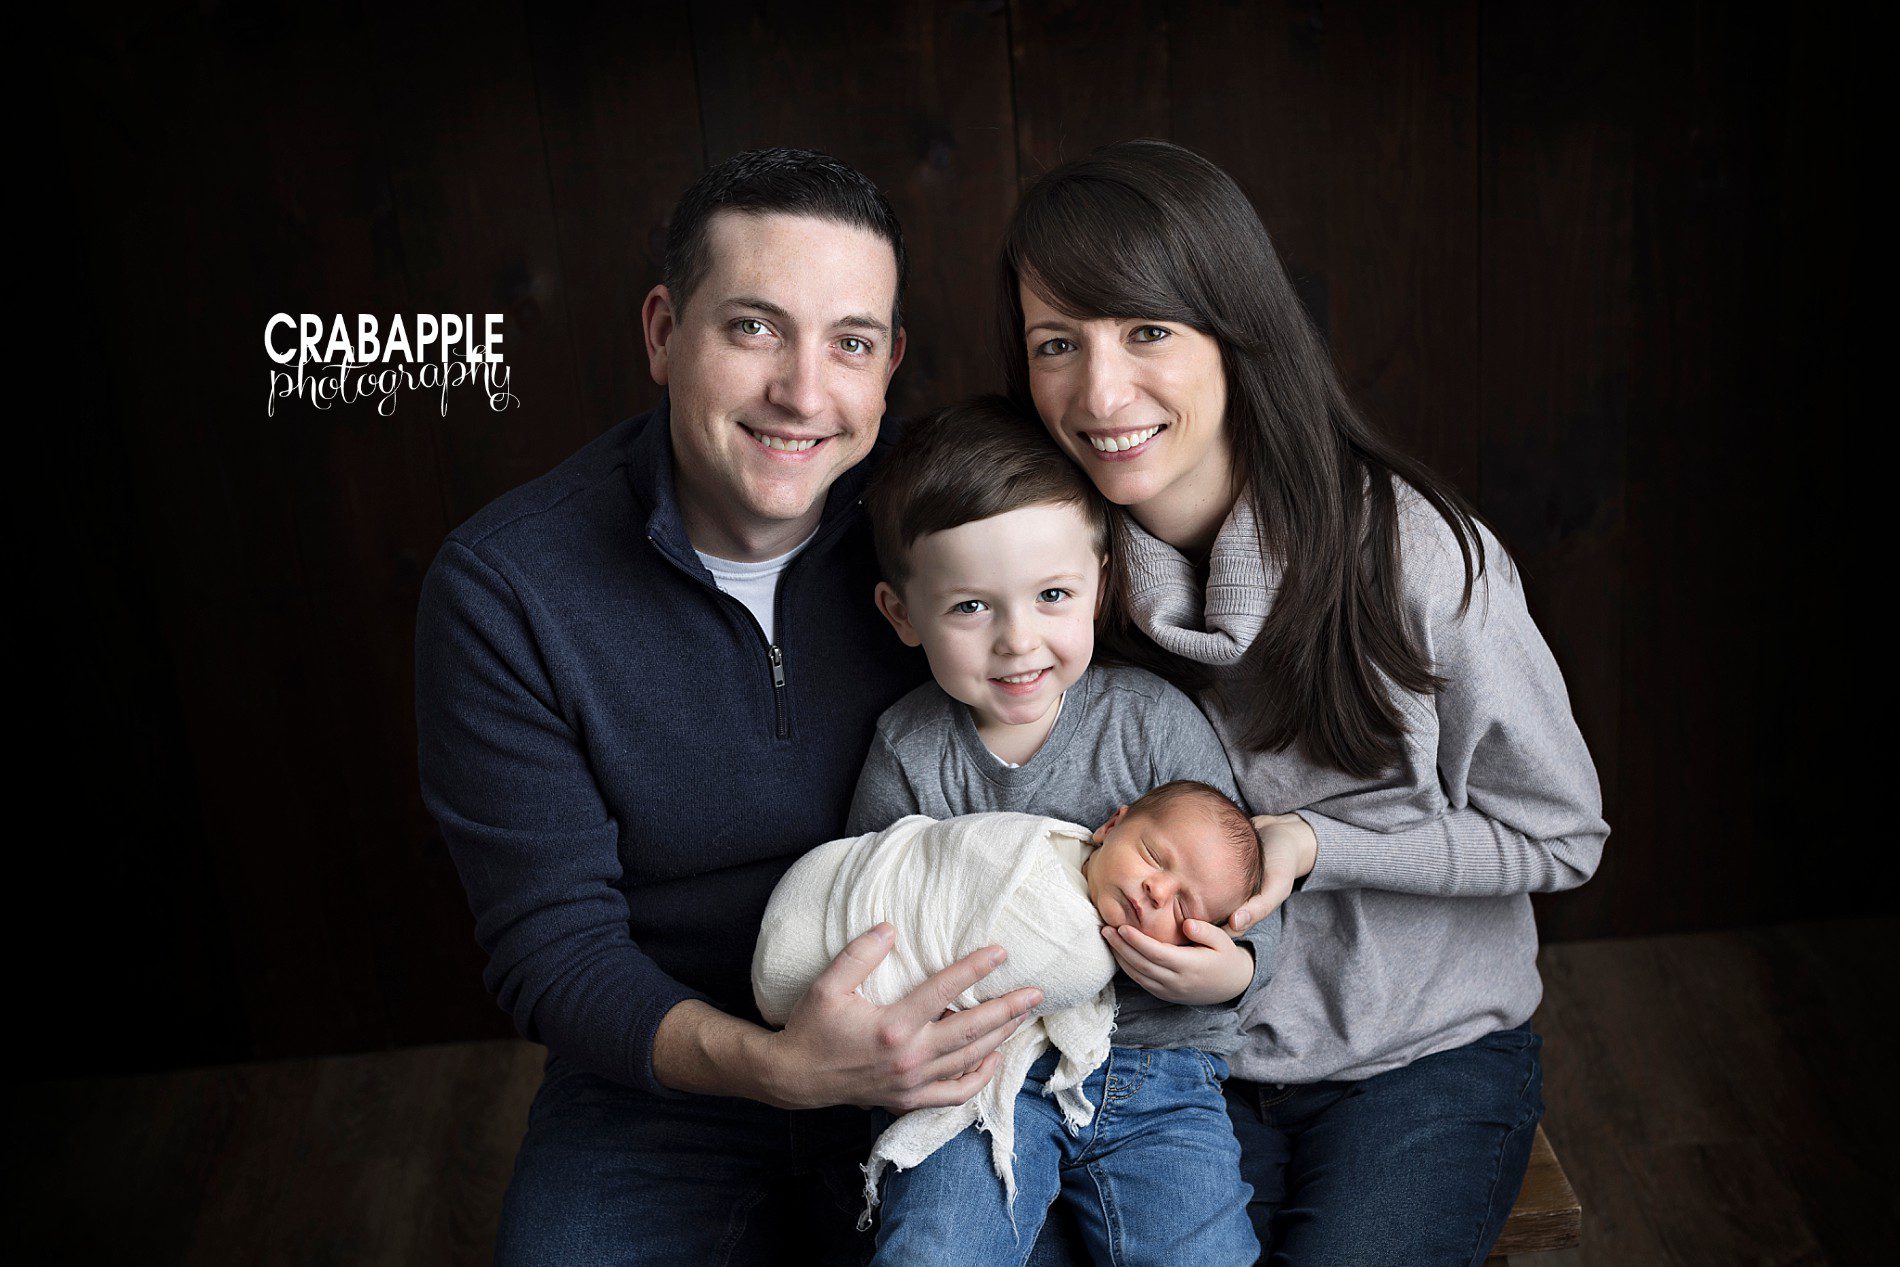 family photos with newborn